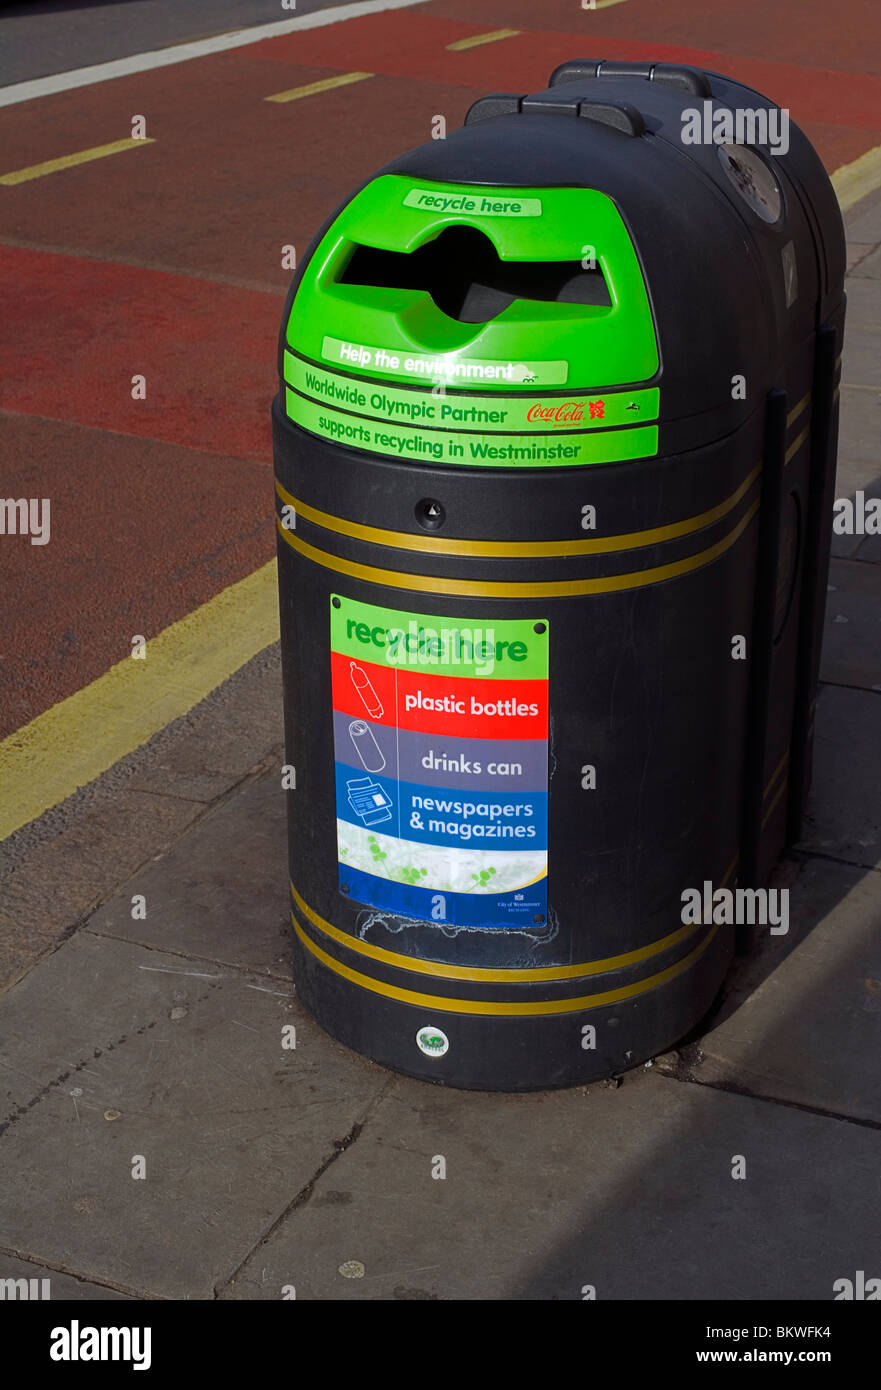 New style safety recycling waste bin, Baker Street, London, UK, Europe Stock Photo